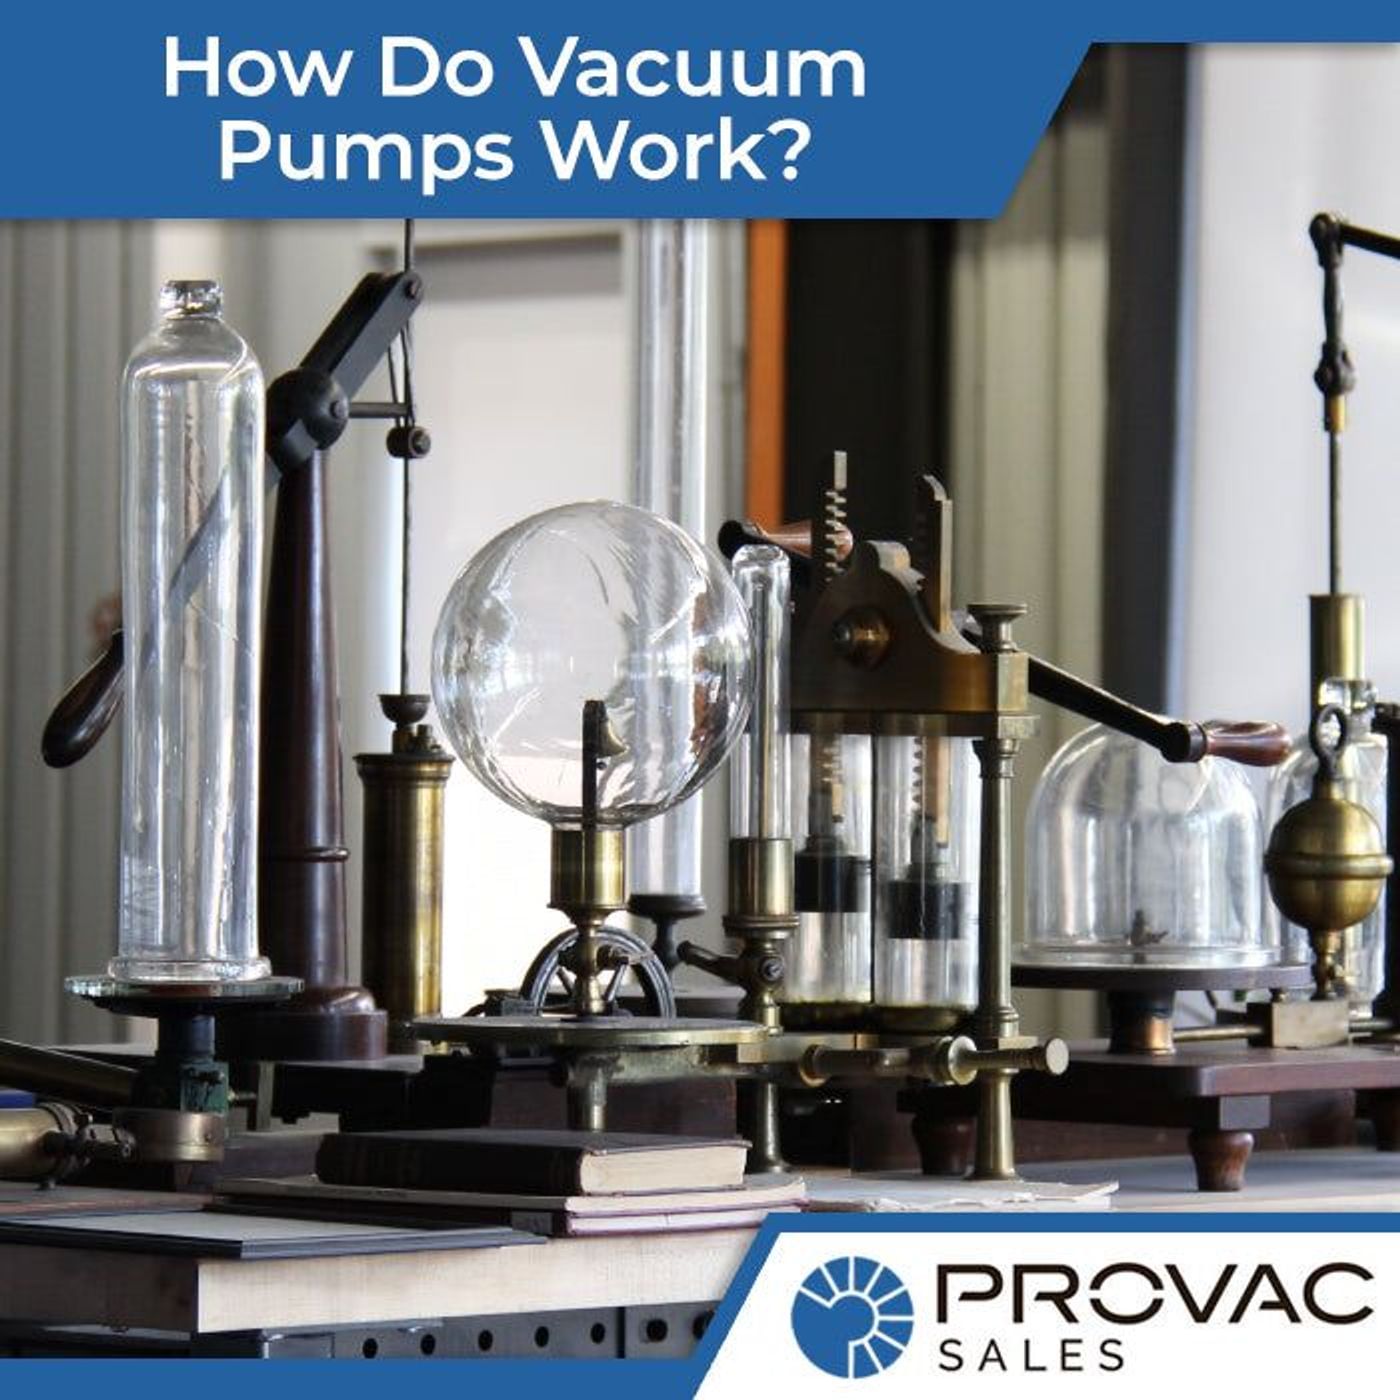 How Do Vacuum Pumps Work?